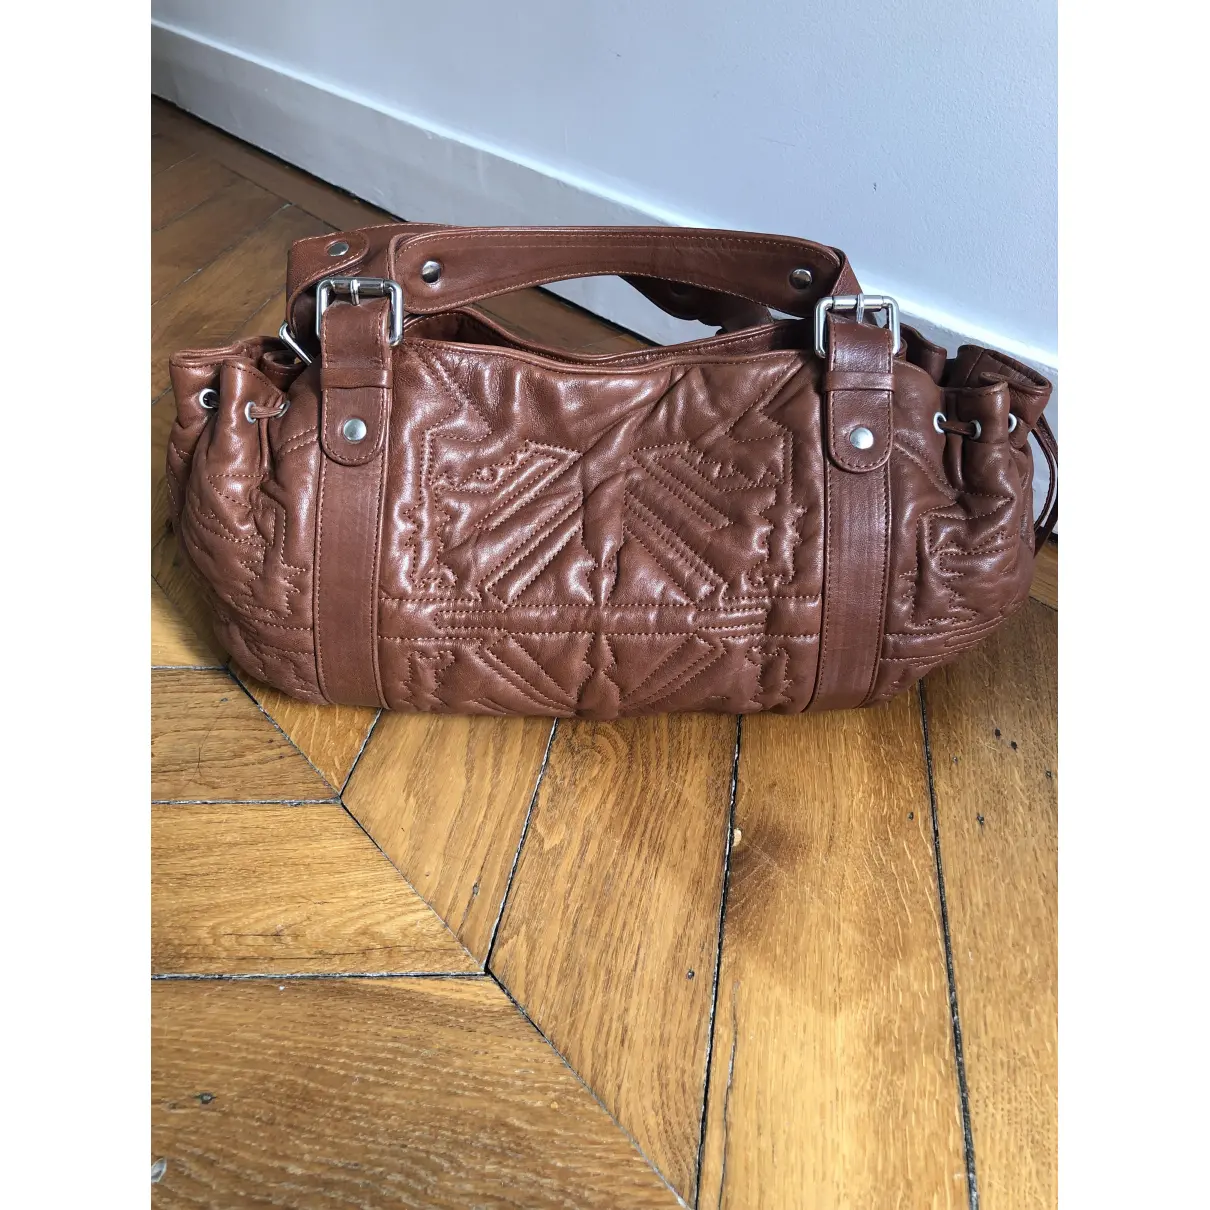 Buy Pablo Leather handbag online